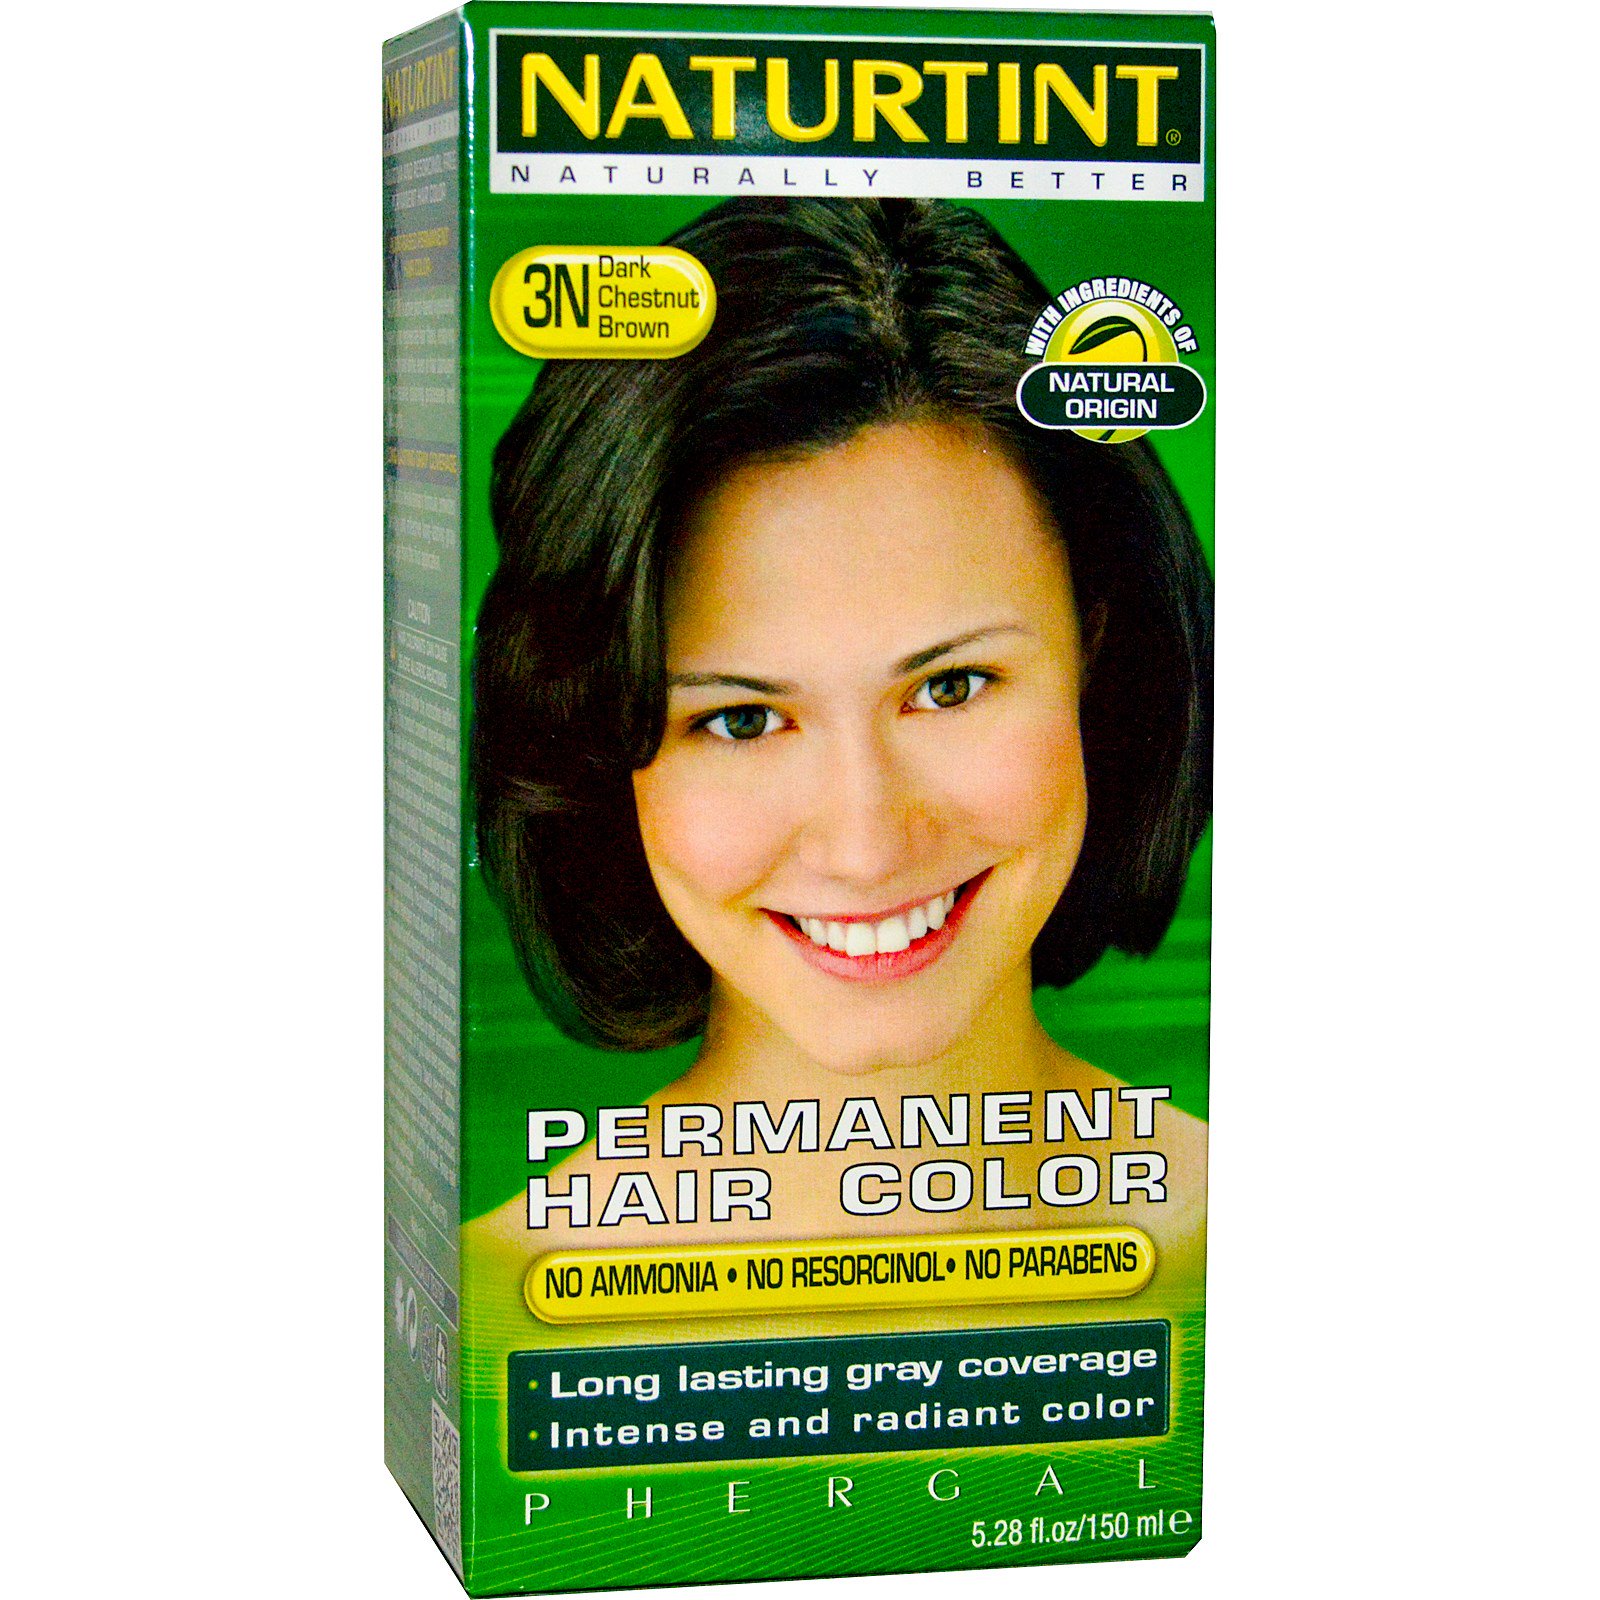 Naturtint Permanent Hair Color 3N Dark Chestnut Brown 528 Fl